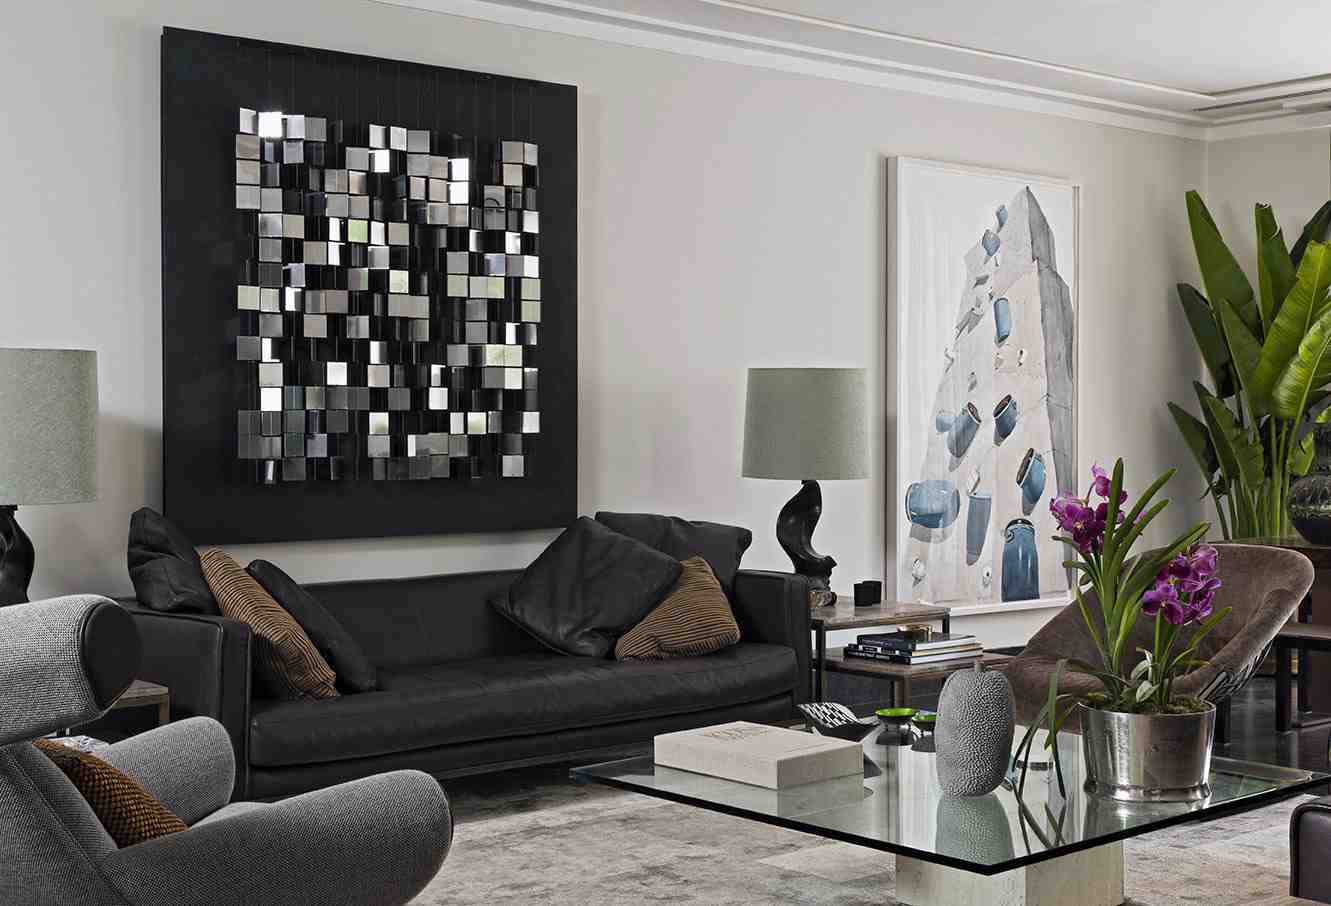 Living Room Wall Decor: 5 Options - Decor Ideas